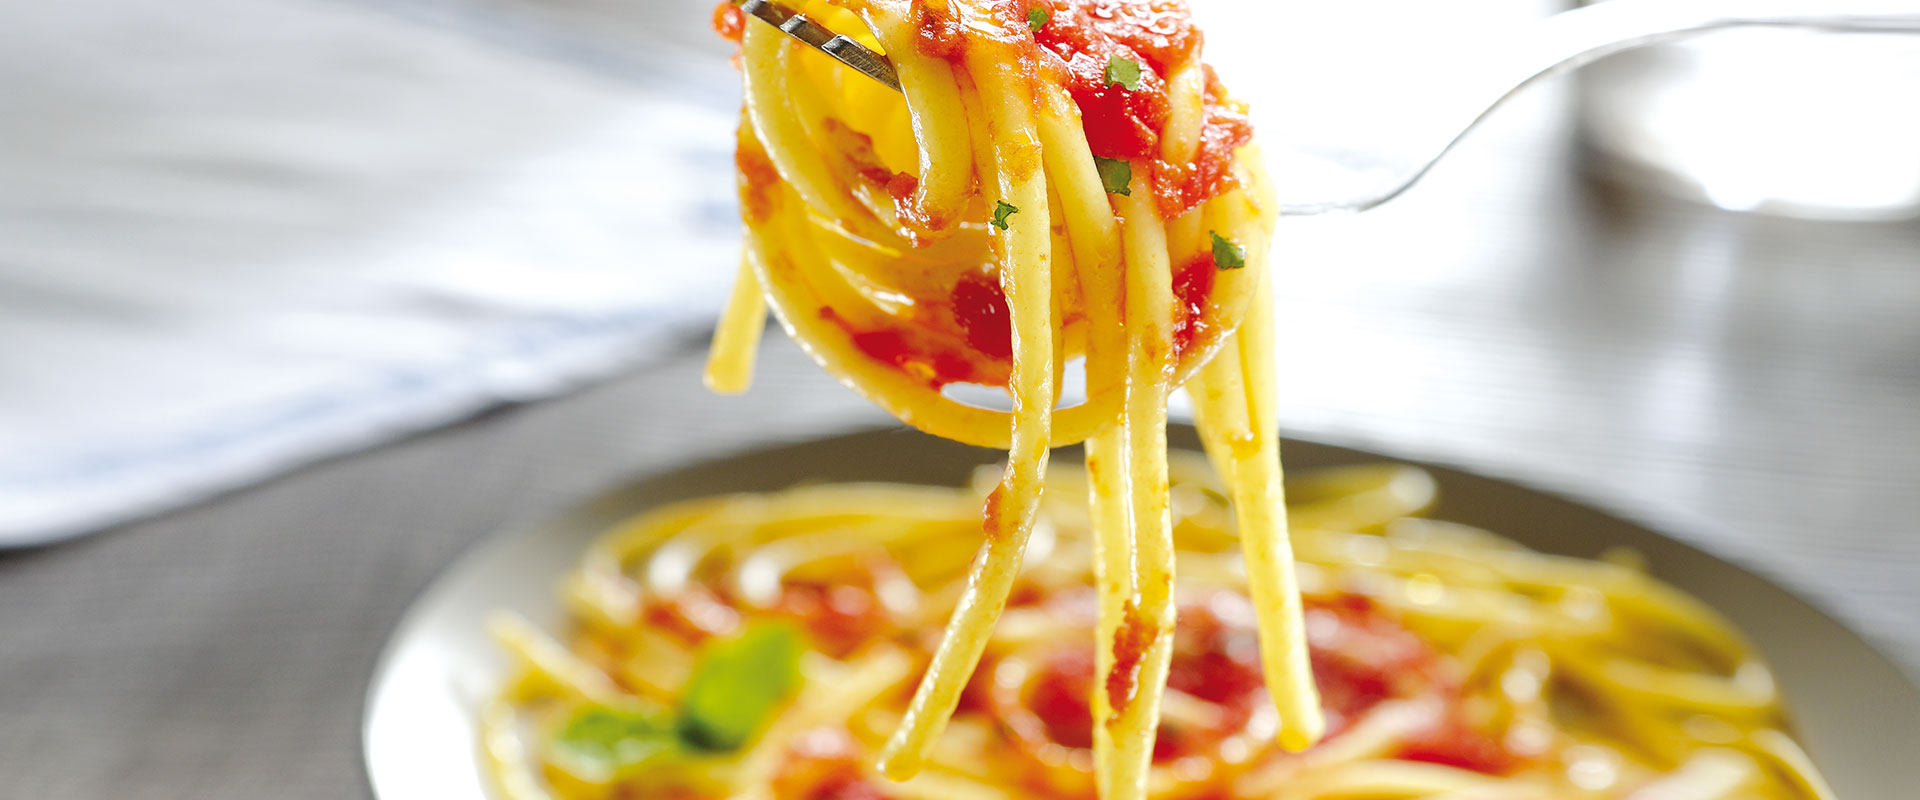 Spaghetti mit Knoblauch, Öl und Chili - Fratelli Carli